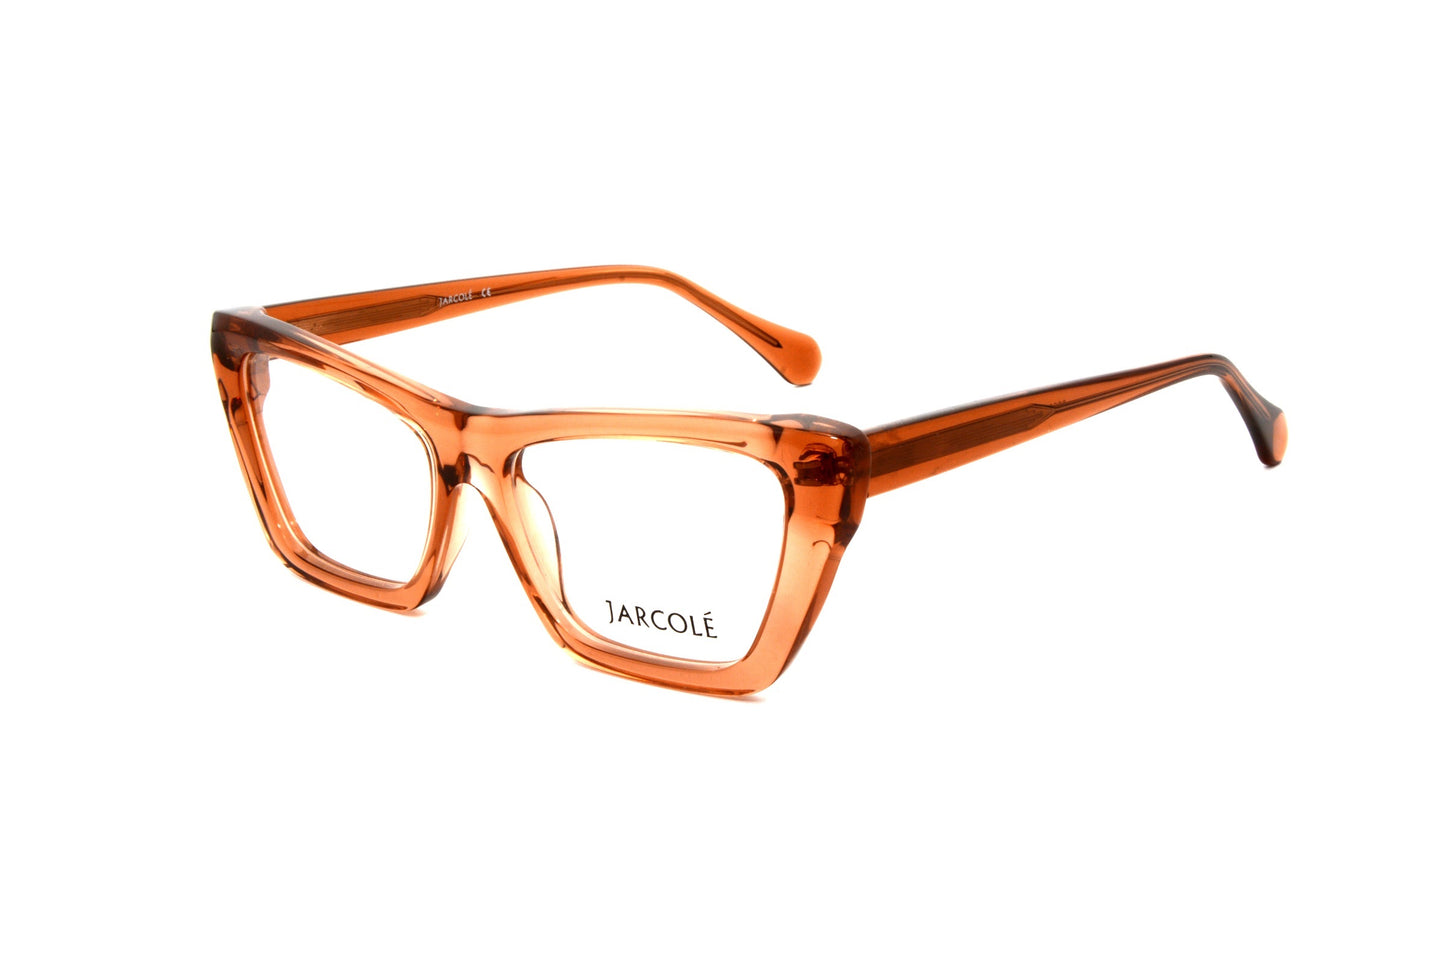 Jarcole eyewear 882217 C03